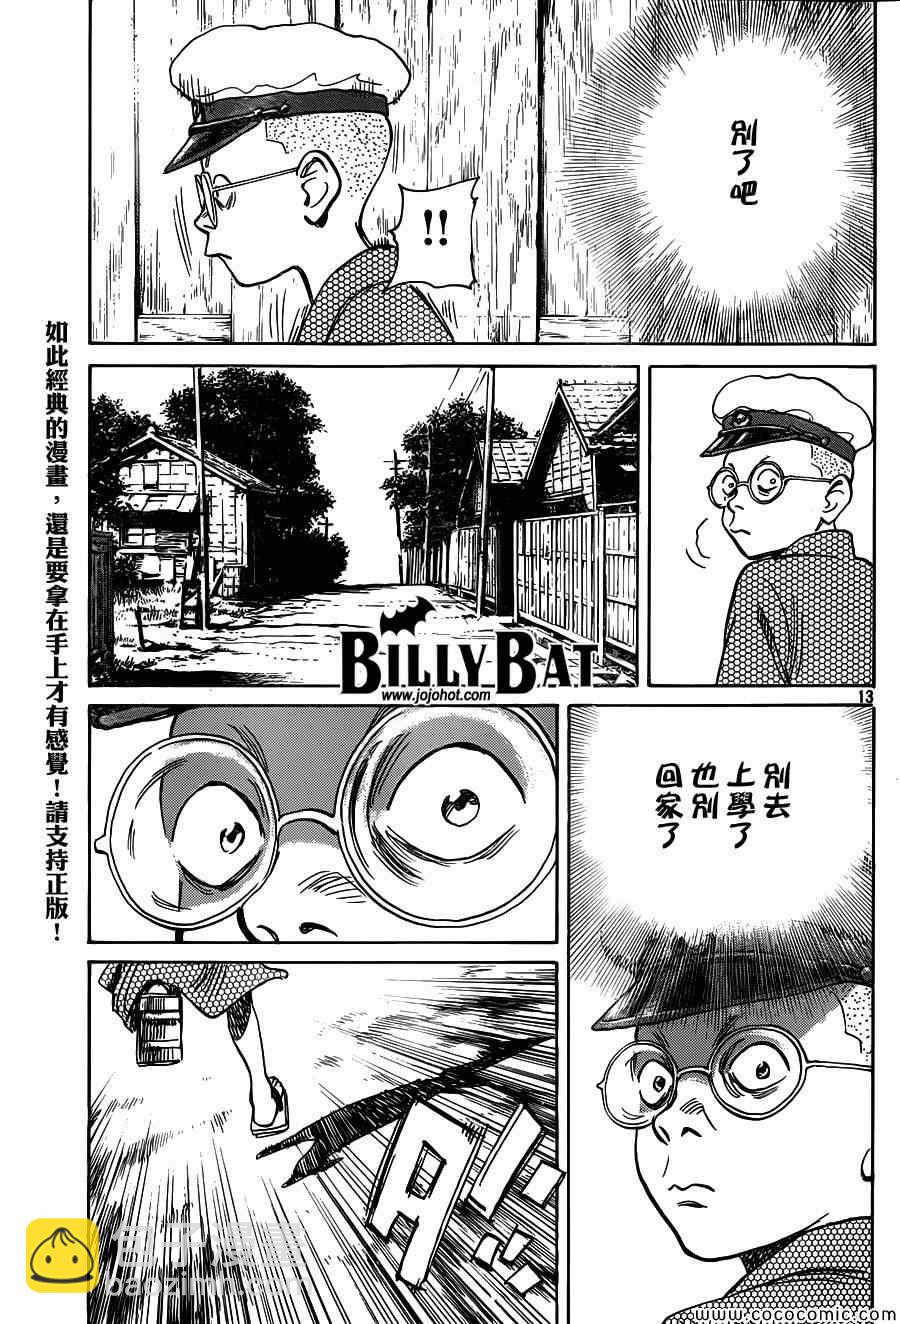 Billy_Bat - 第107话 - 3